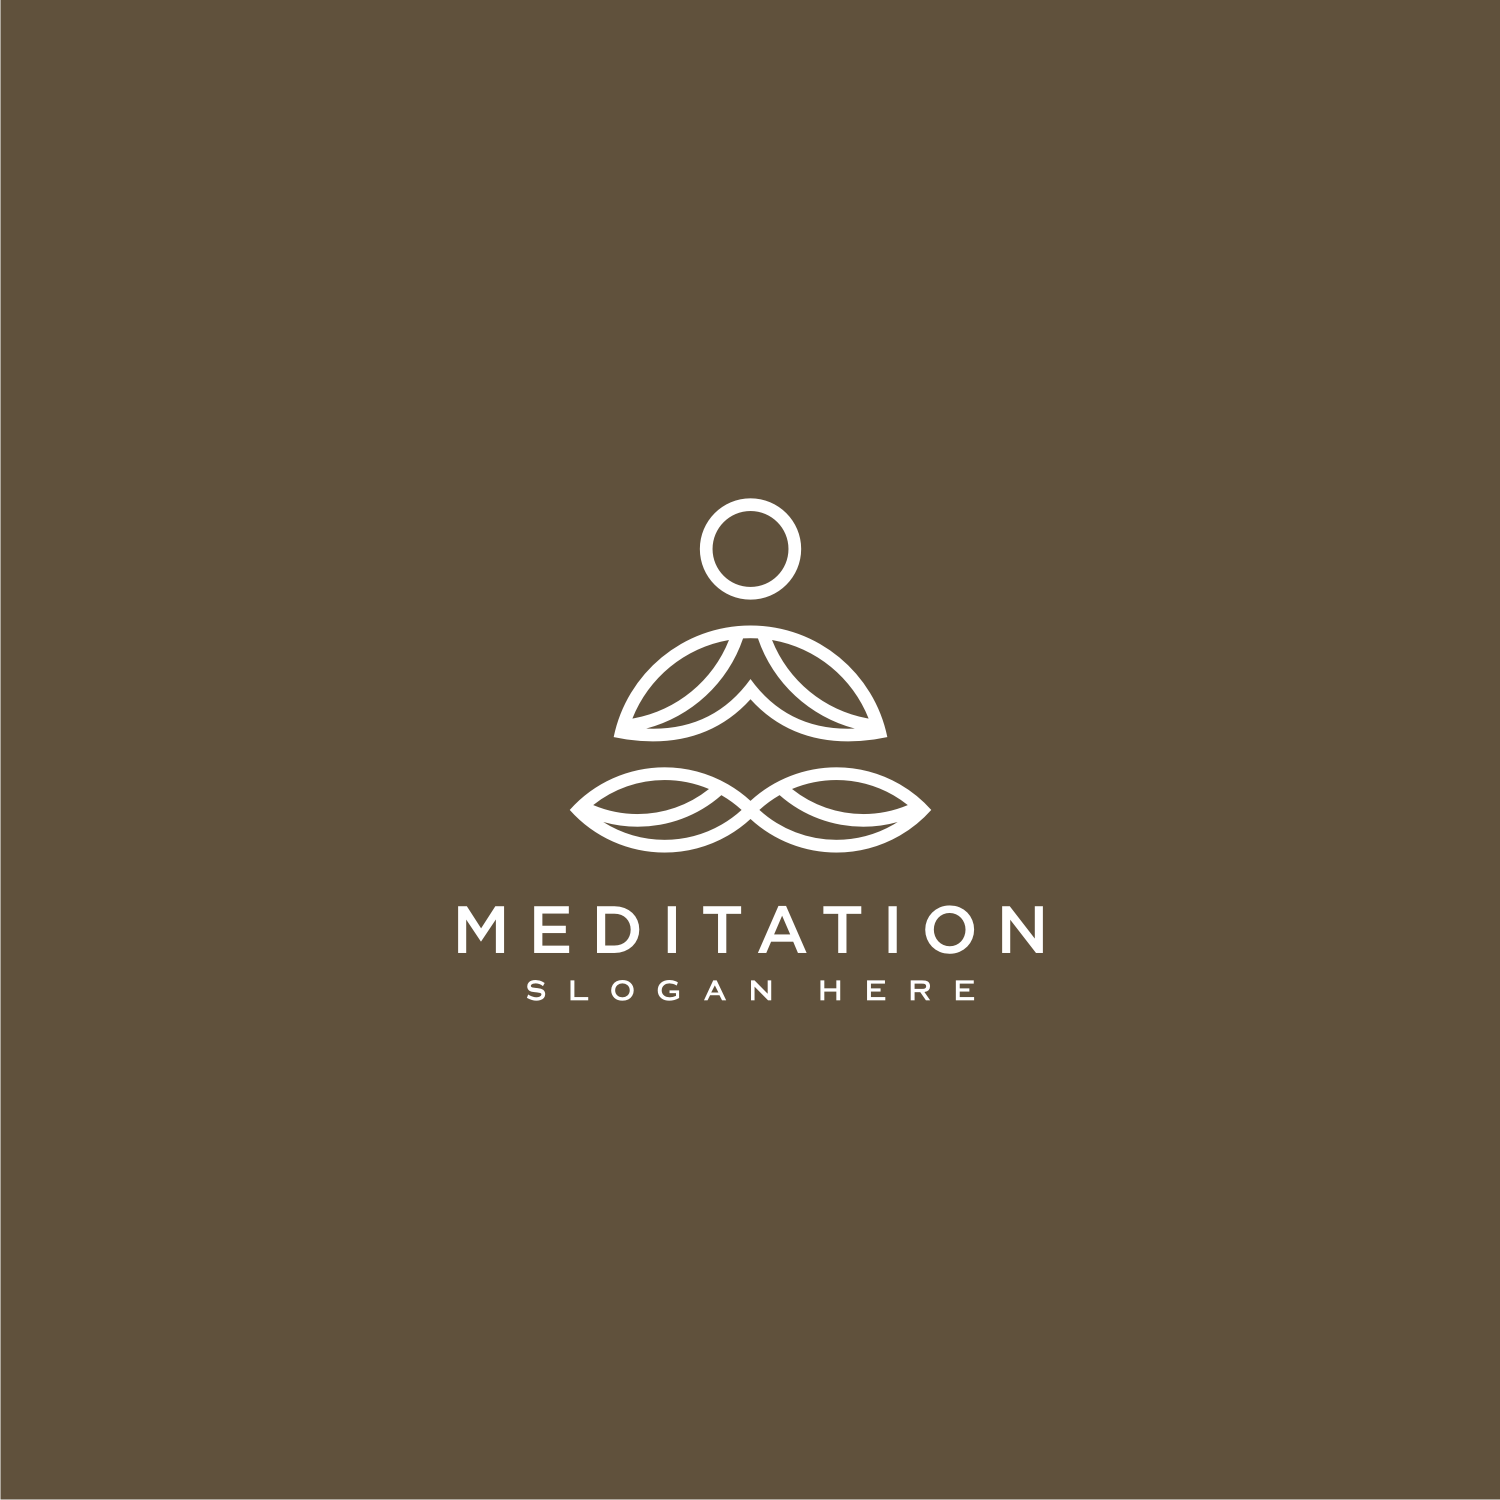 Yoga Meditation Logo Vector Preview Image.